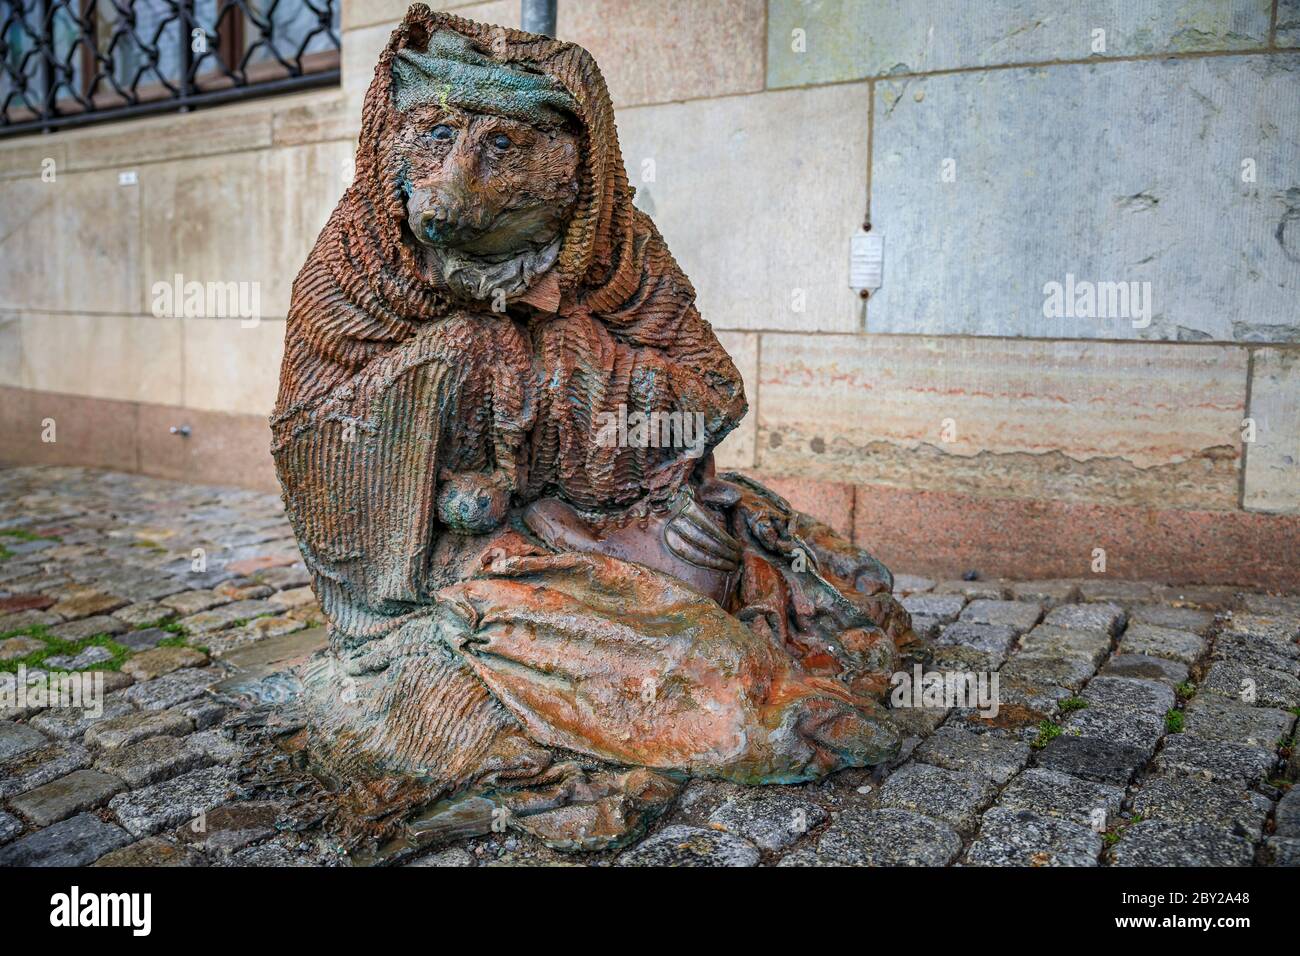 Stockholm, Sweden - September 17, 2017: Homeless brass fox statue on Drottninggatan street called Rag and Bone, by Laura Ford, installed in 2008 Stock Photo